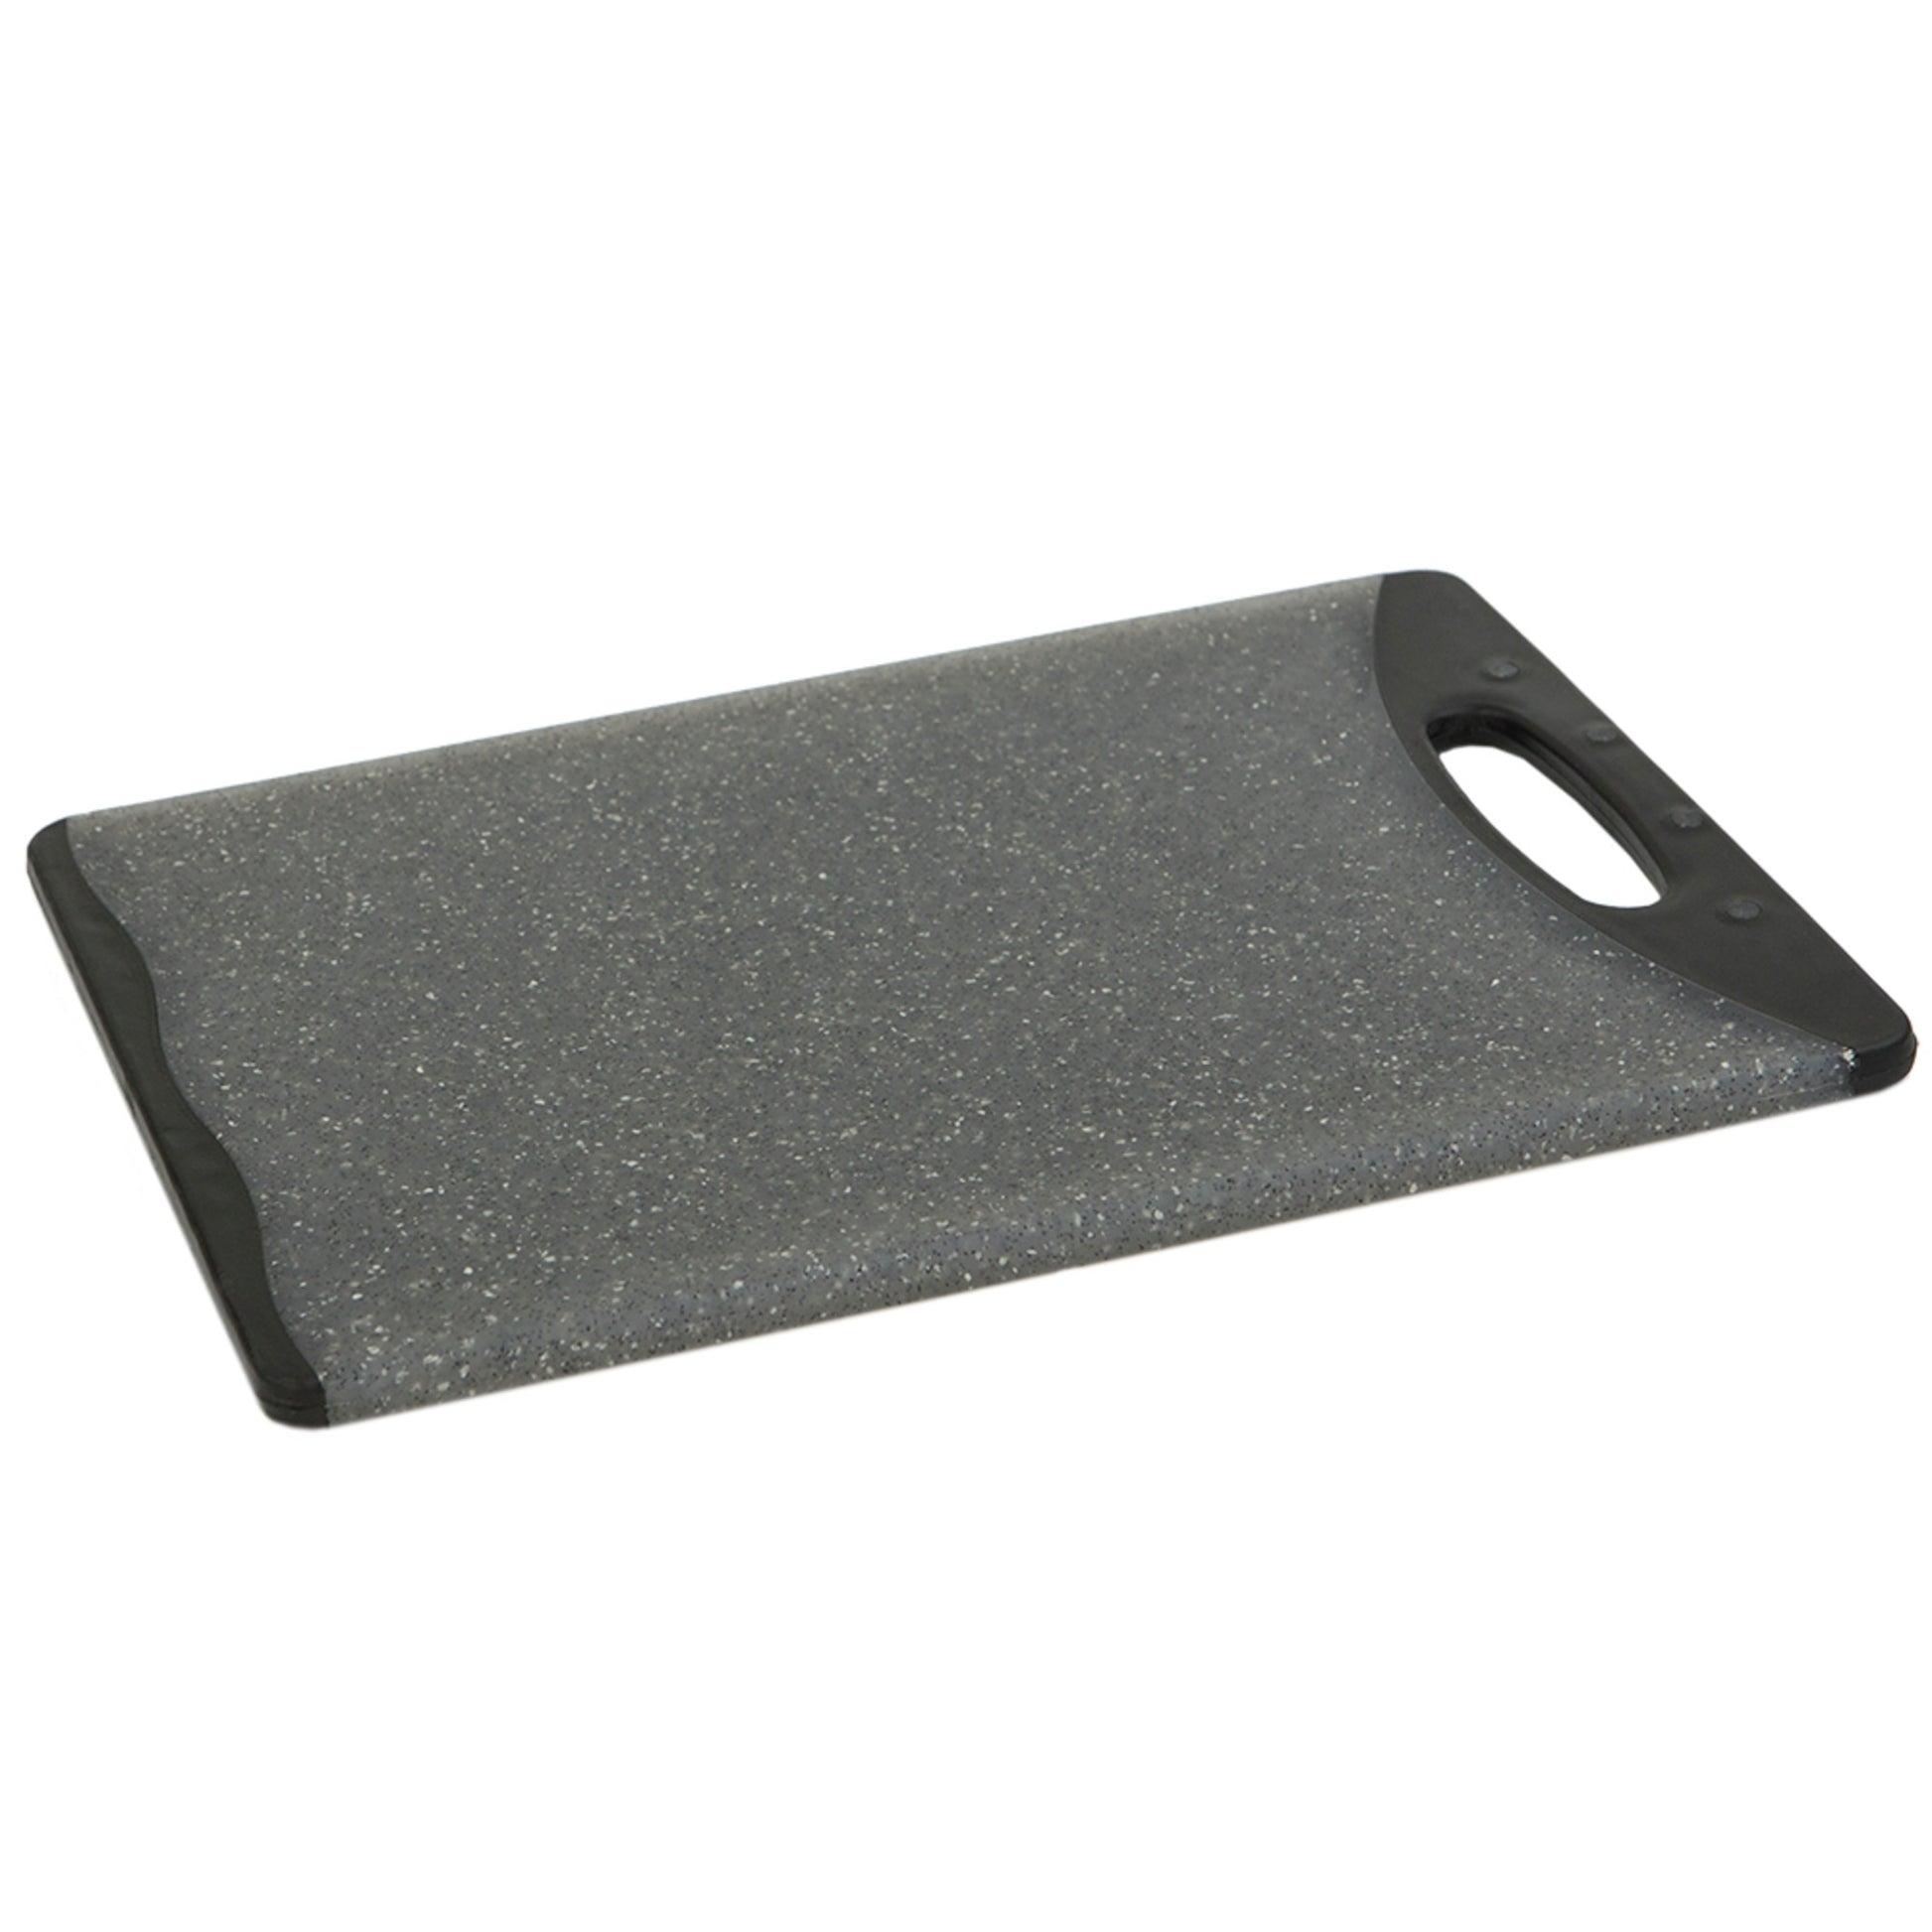 Home Basics Double Sided 8" x 11.5" Granite Plastic Cutting Board, Grey - Grey